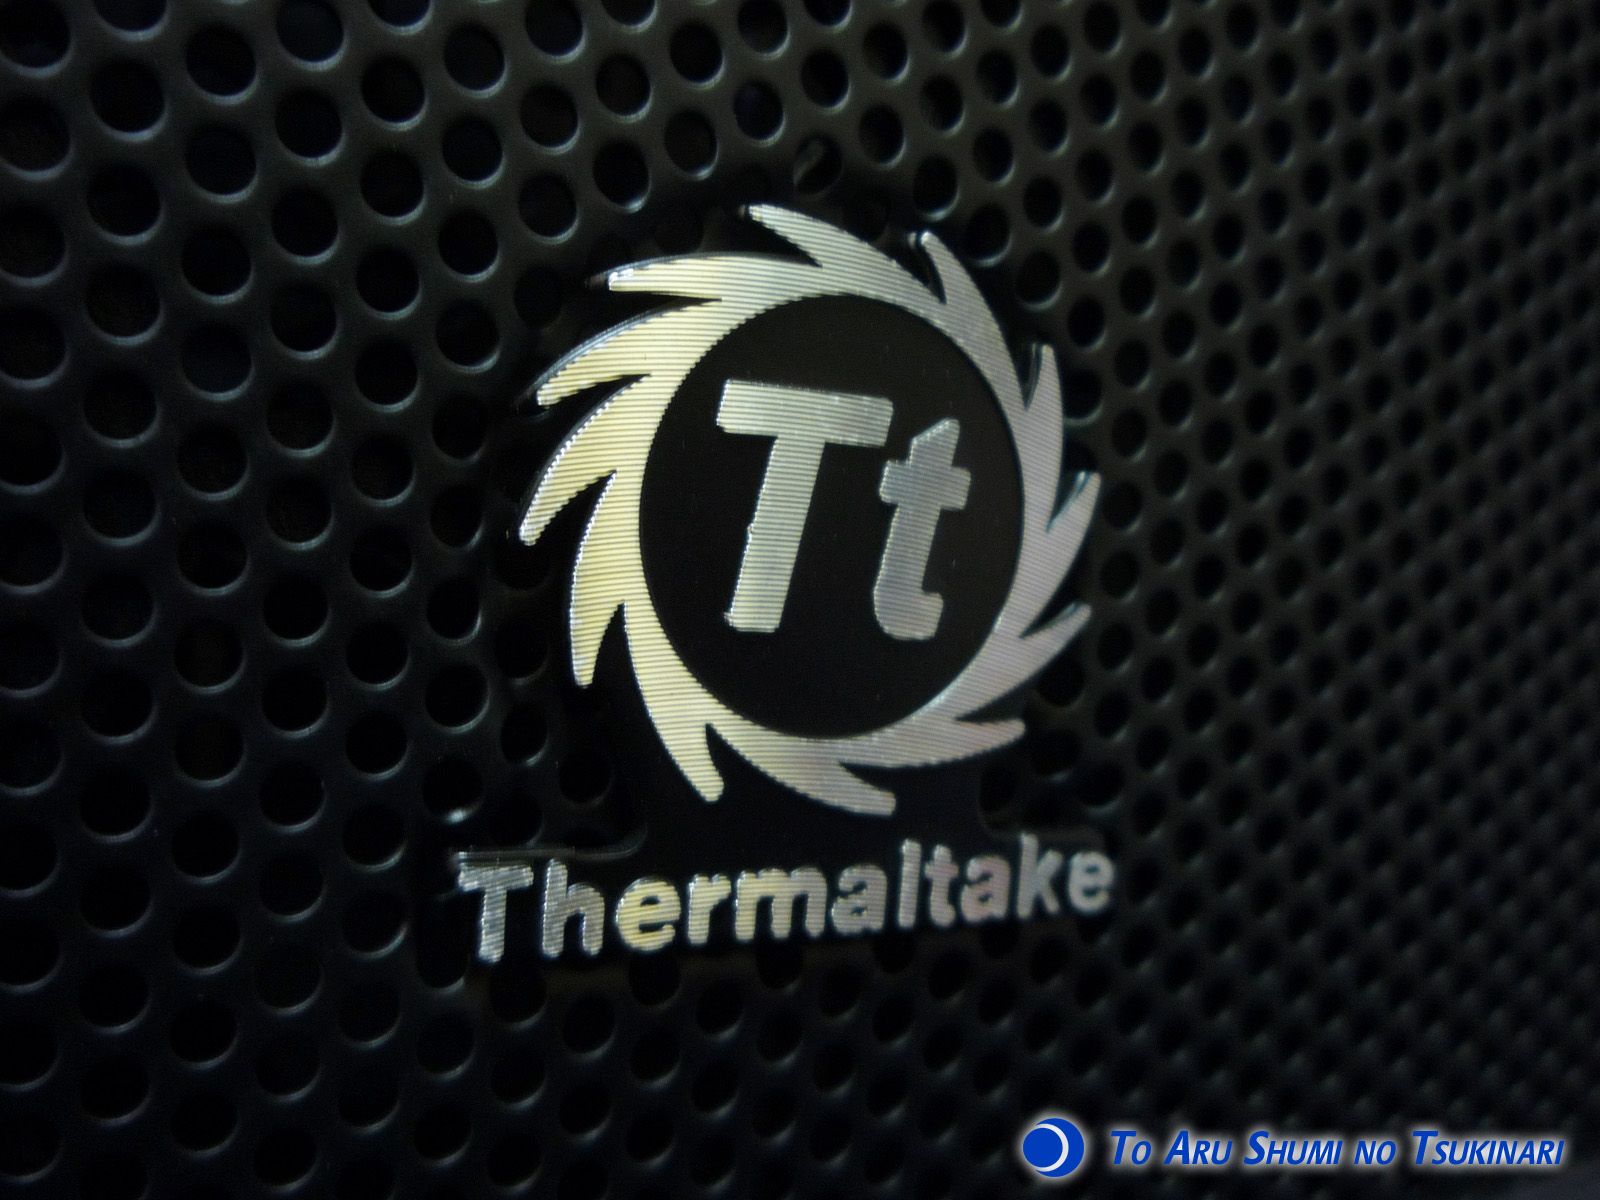 Thermaltake Wallpaper. Thermaltake CyberPower Wallpaper, Thermaltake Wallpaper and Thermaltake Background